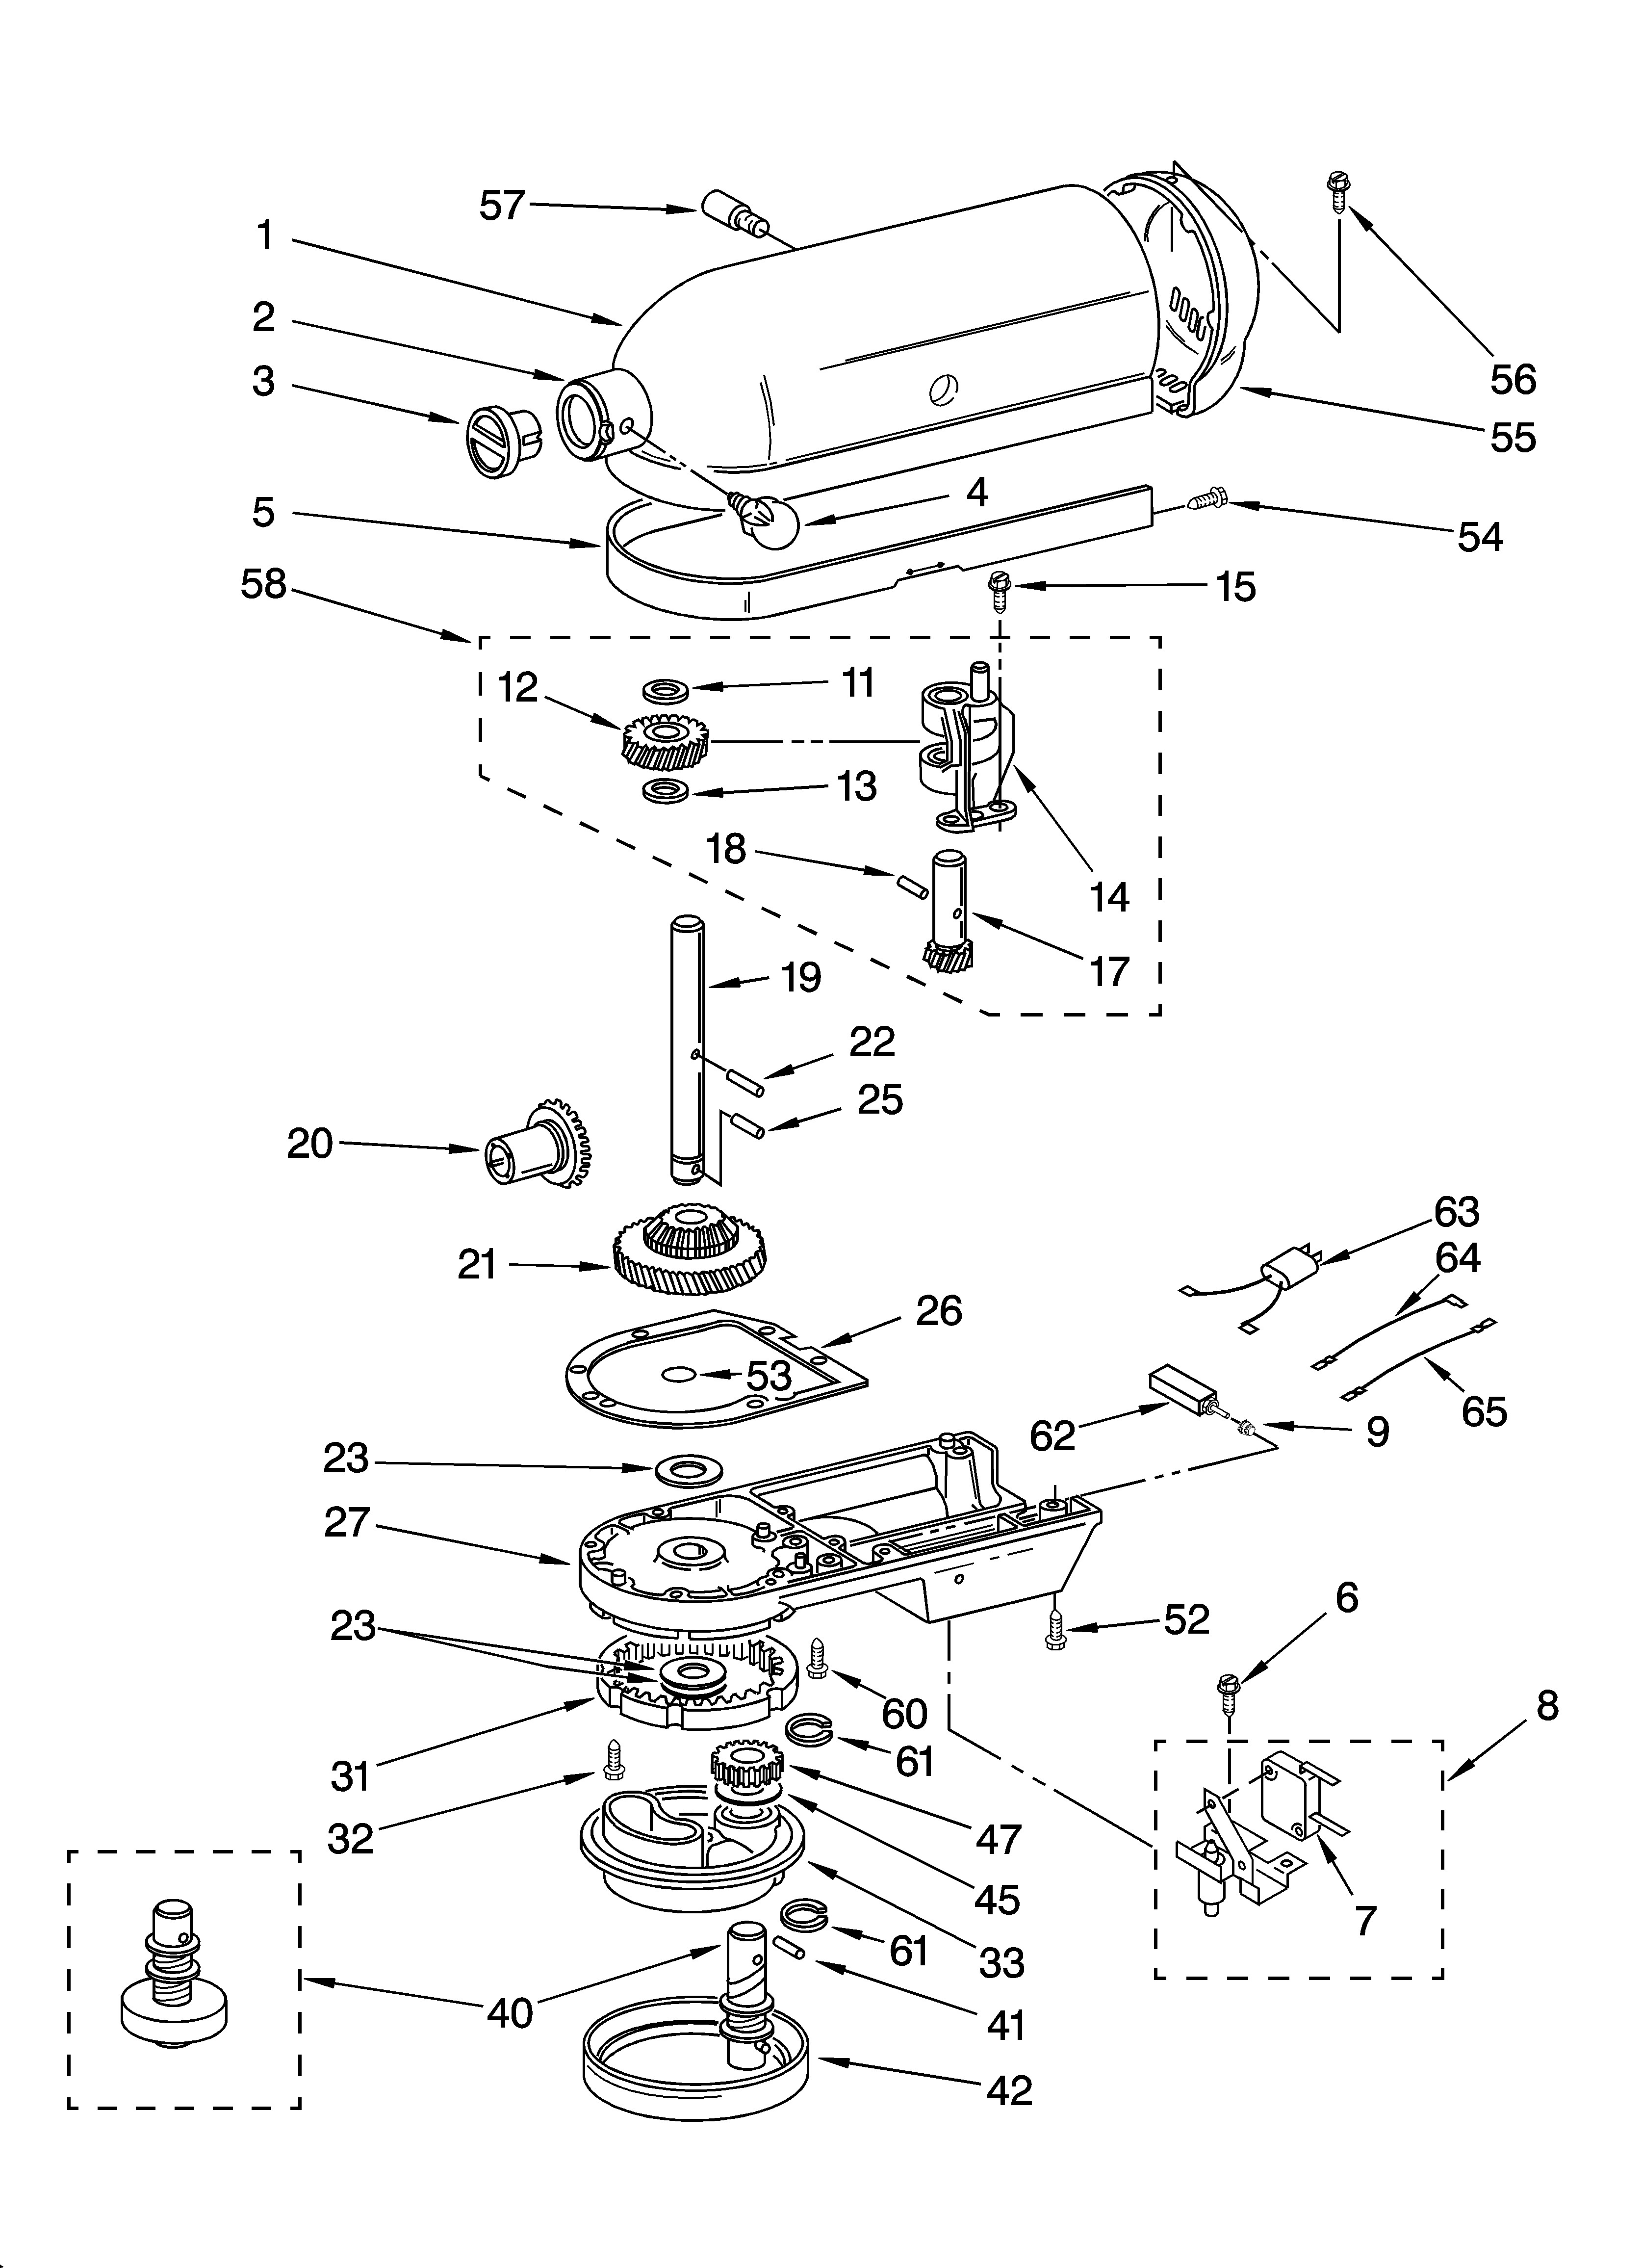 Hobart Mixer Parts Diagram | My Wiring DIagram